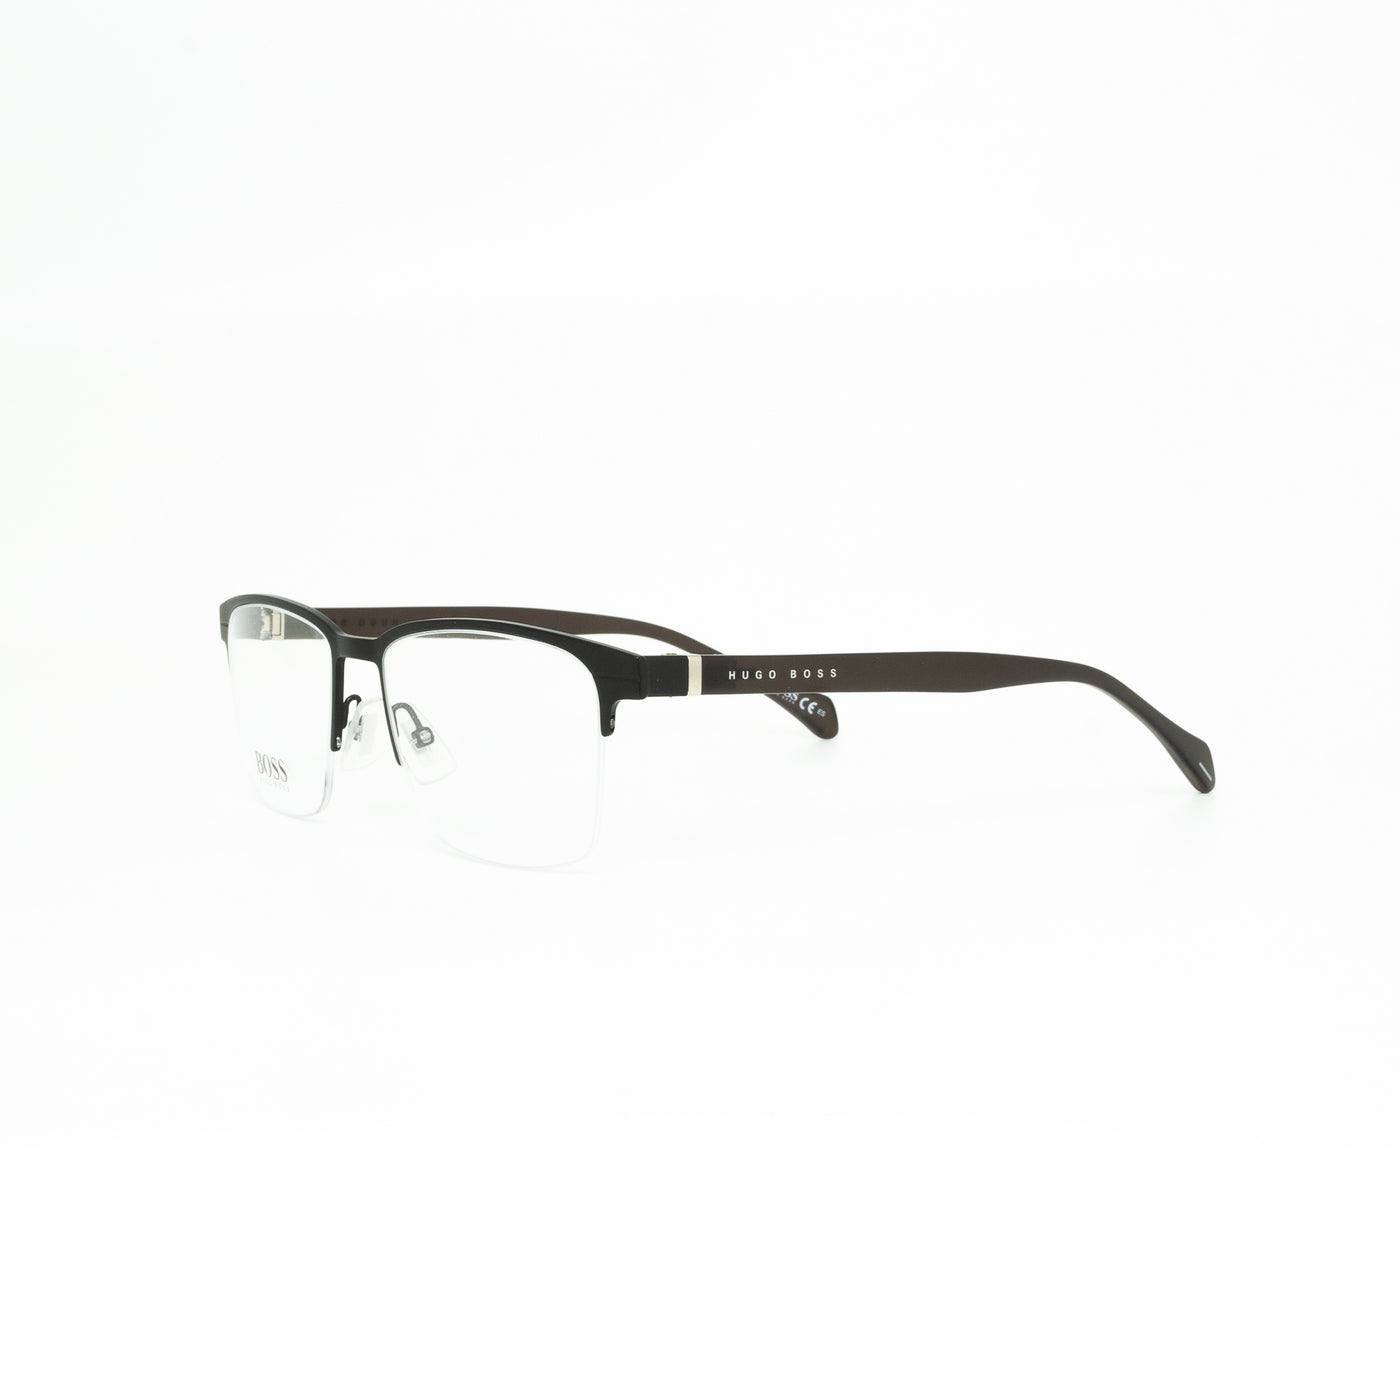 Hugo Boss HB112000354 | Eyeglasses - Vision Express Optical Philippines